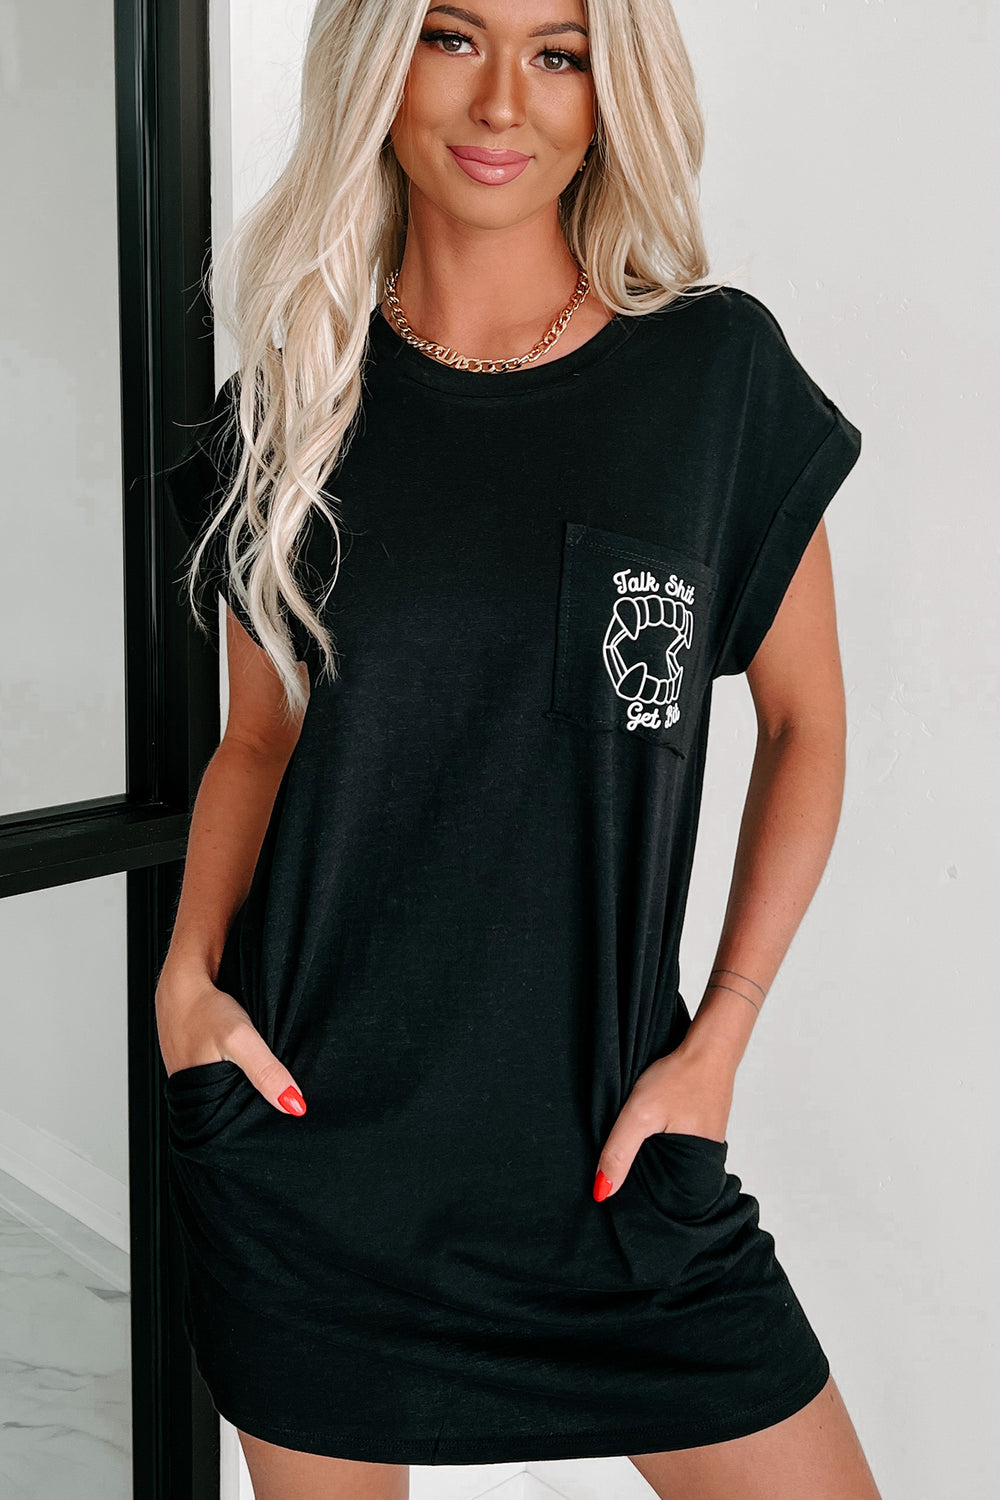 Doorbuster "Talk Shit Get Bit" Graphic T-Shirt Dress (Black) - Print On Demand - NanaMacs